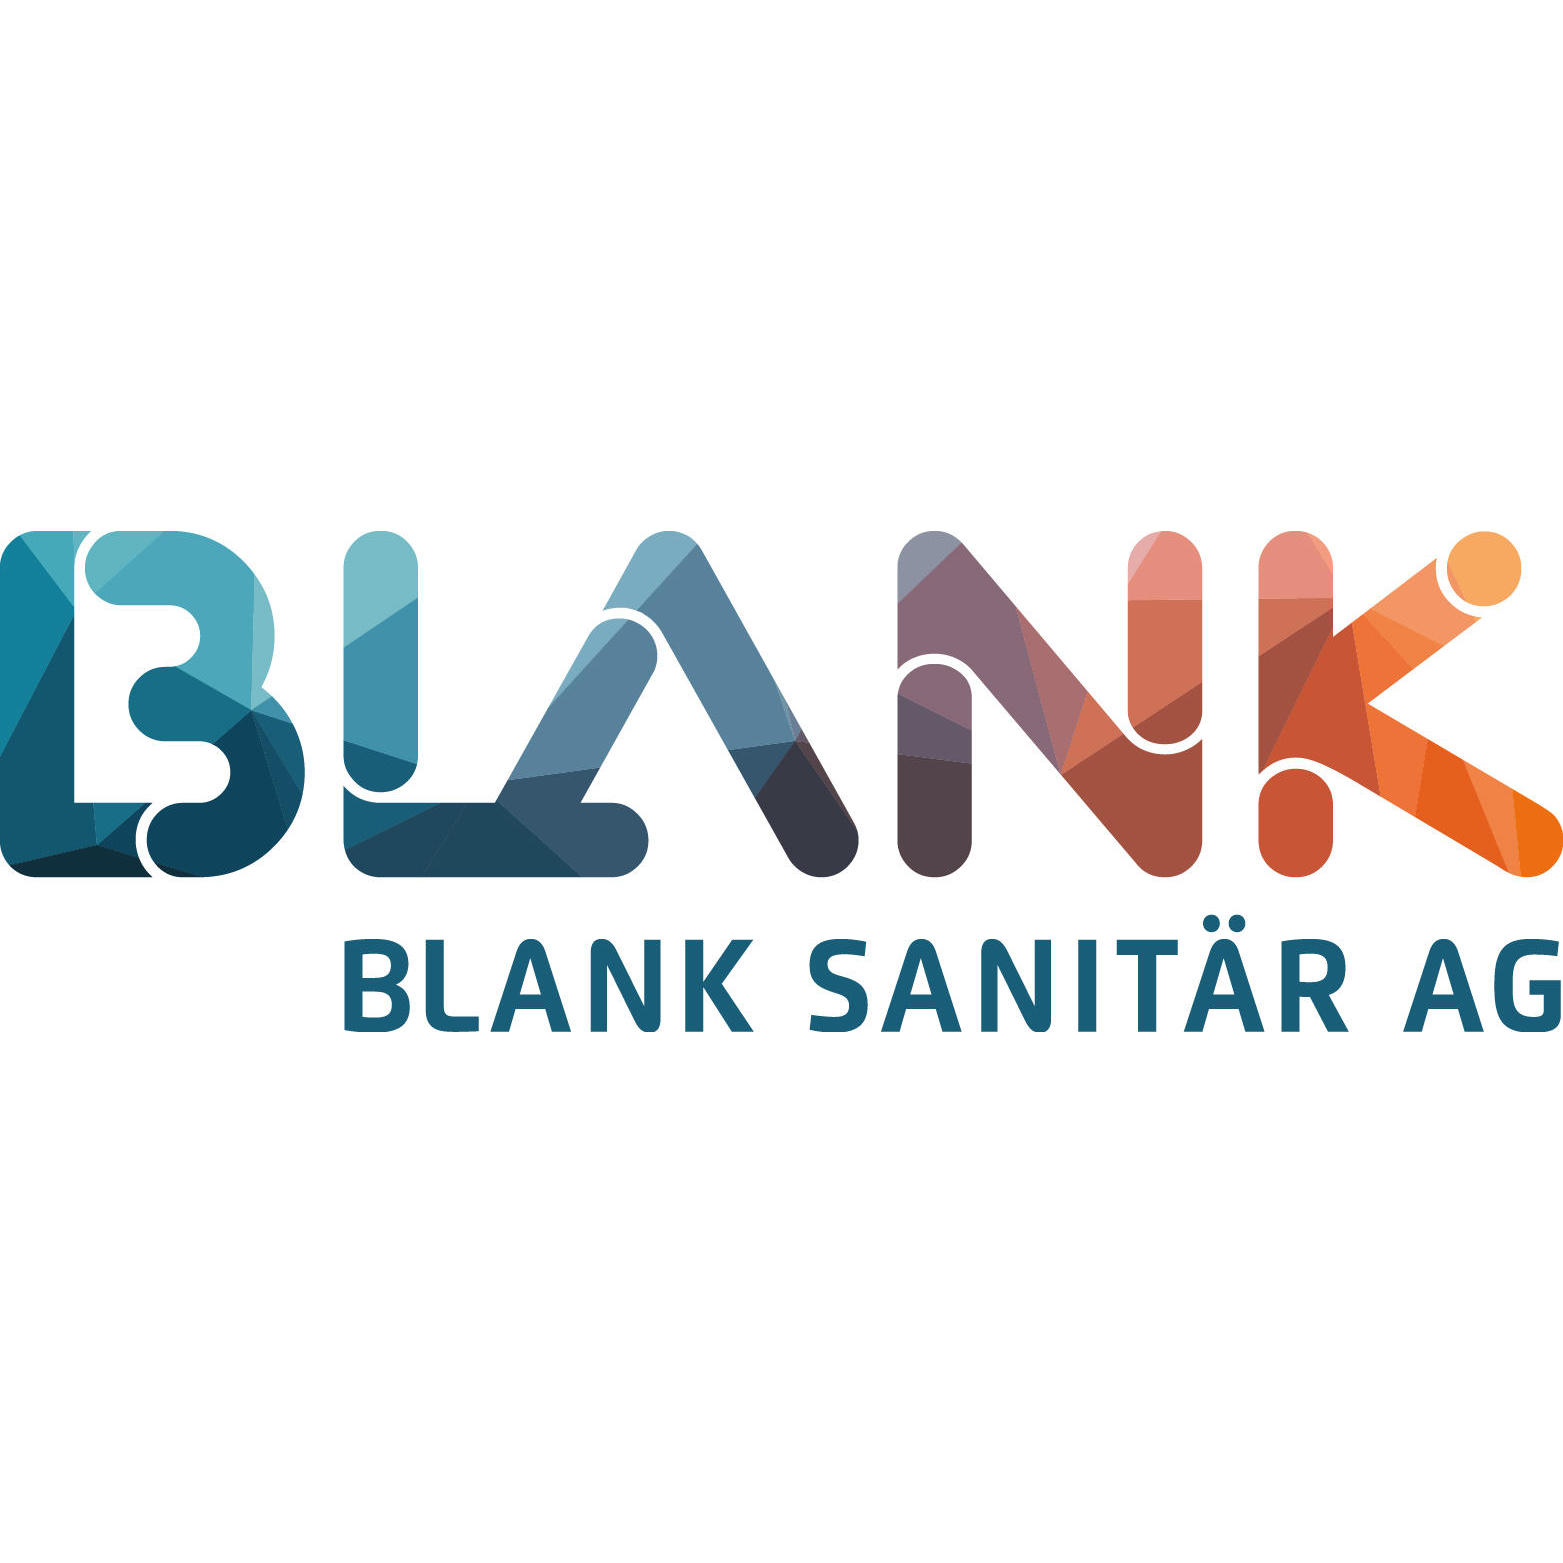 Blank Sanitär AG Logo